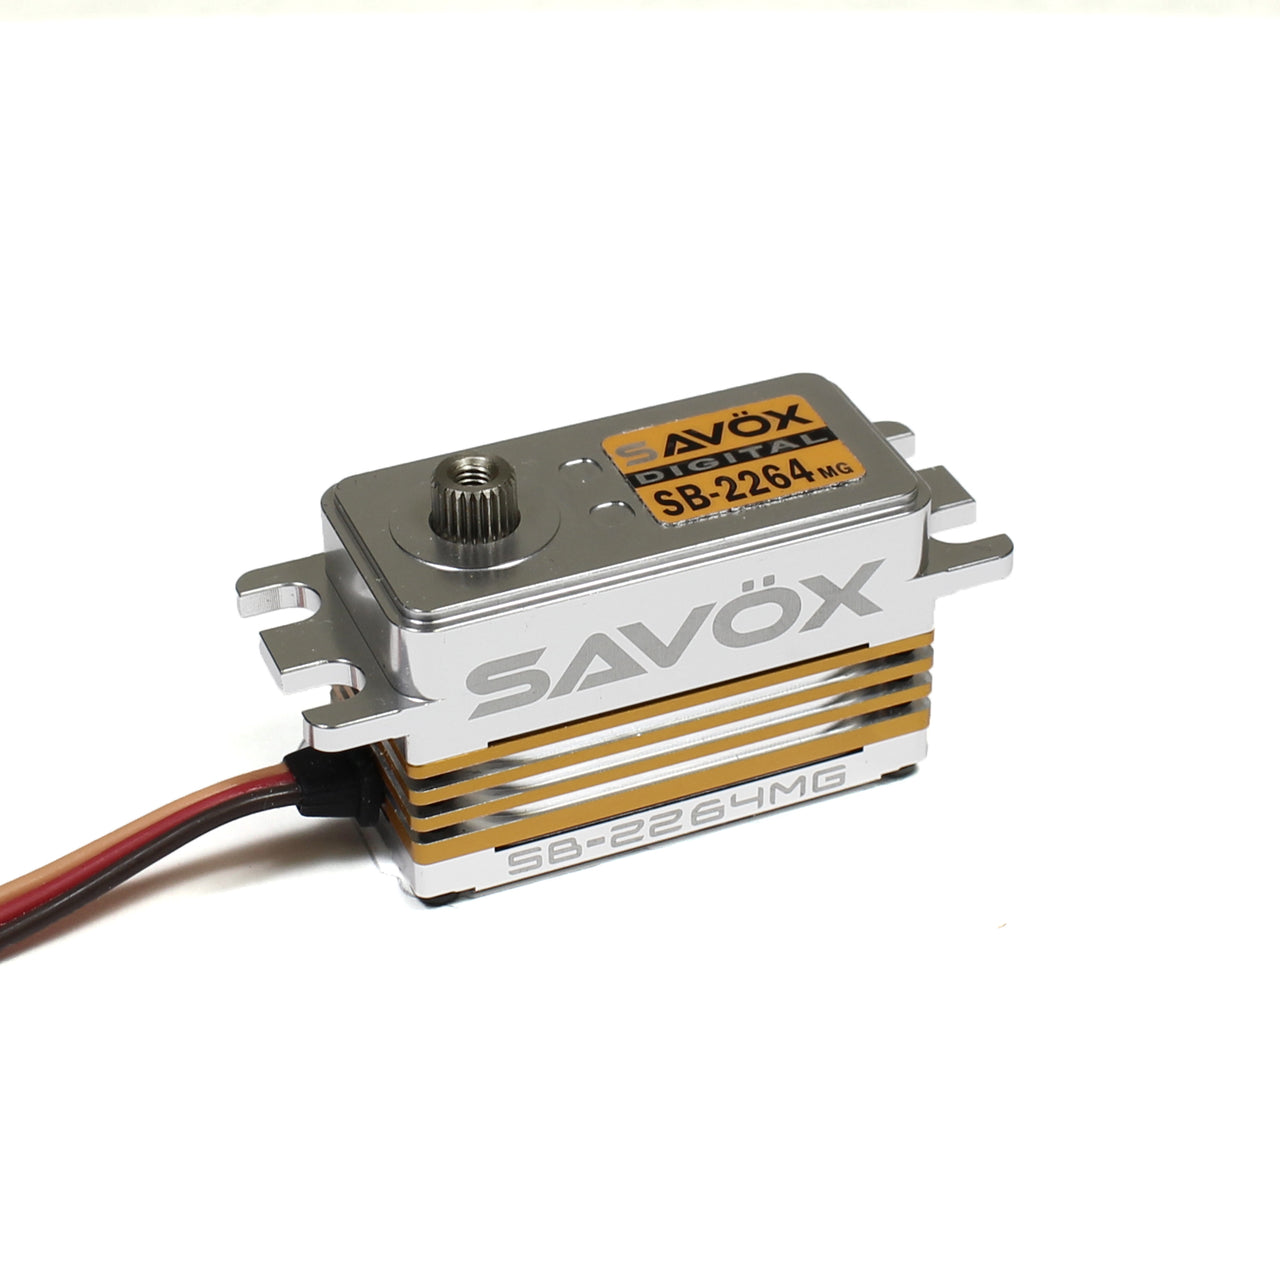 SAVSB2264MG Low Profile High Voltage Brushless Servo 0.085sec / 208.3oz @ 7.4V